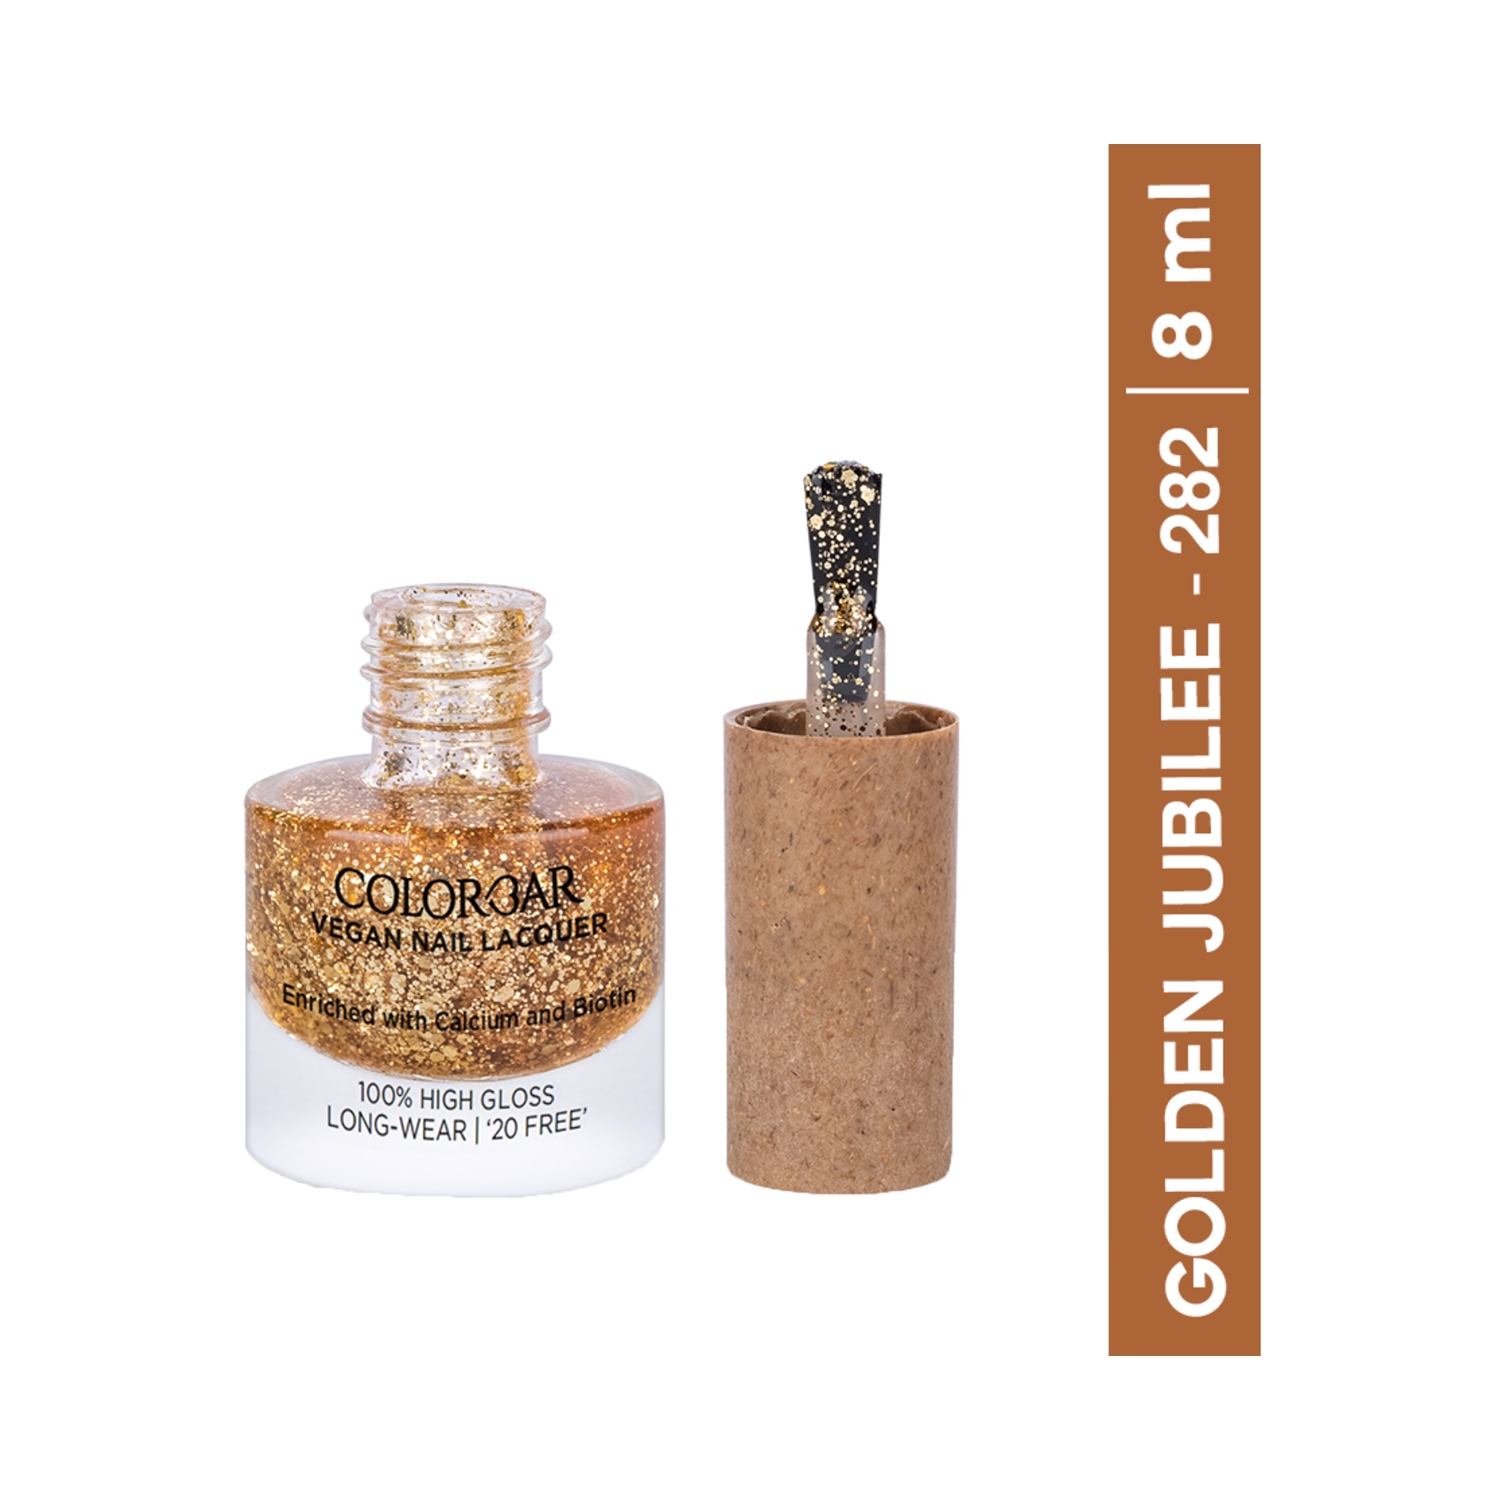 Colorbar | Colorbar Vegan Nail Lacquer - 282 Golden Jubilee (8 ml)